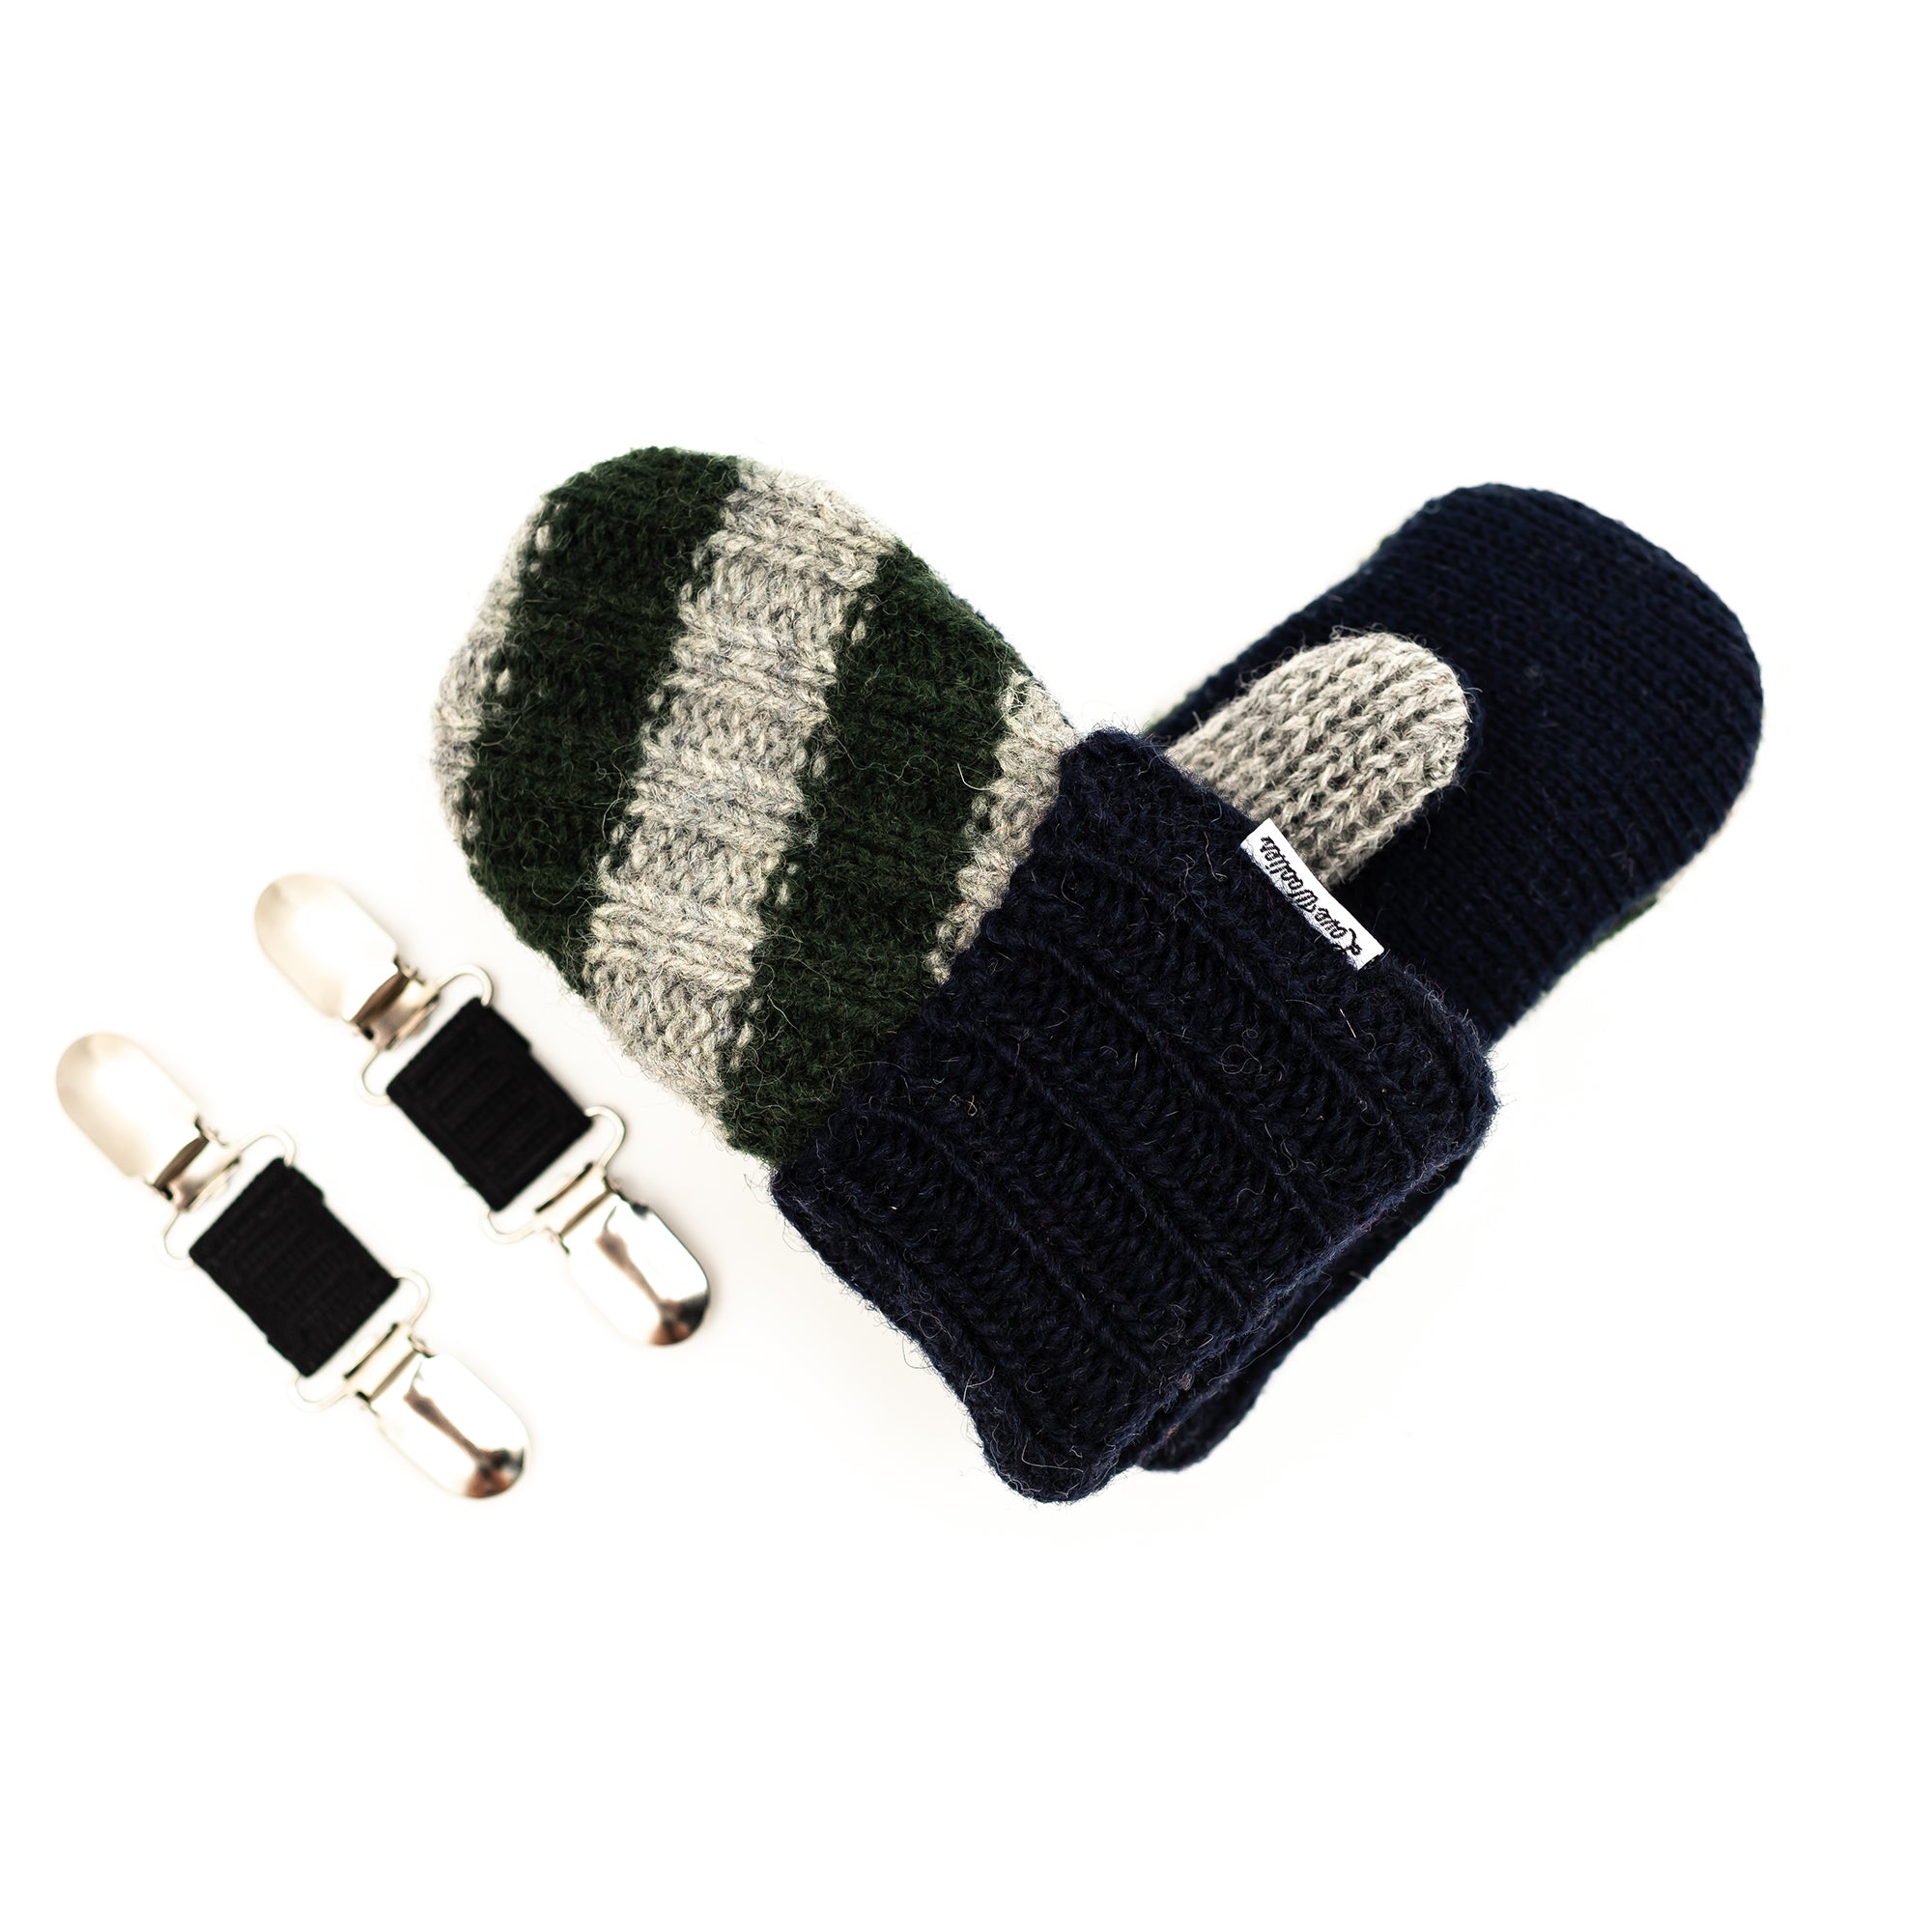 Small Kid's Wool Sweater Mittens | Tiny Tyke